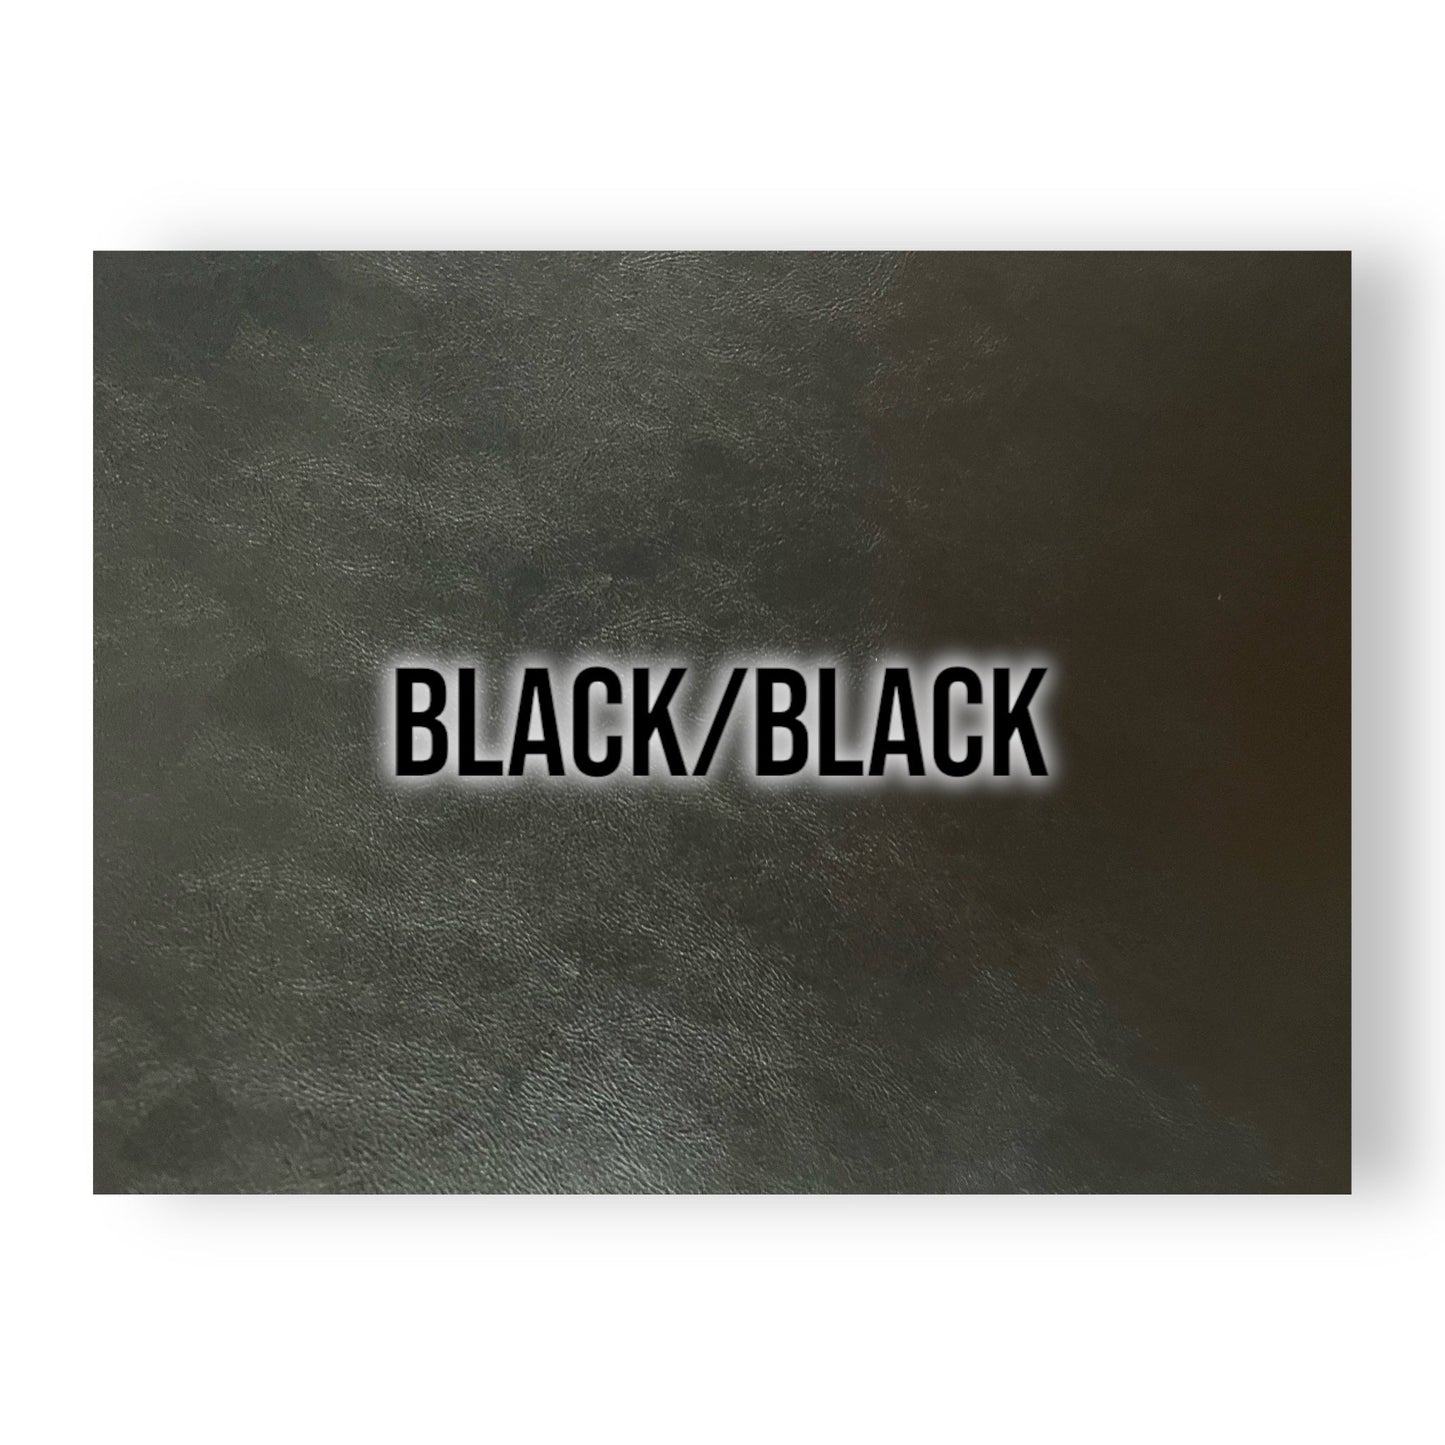 NO ADHESIVE BLACK/BLACK LEATHERETTE SHEET (12"x24")